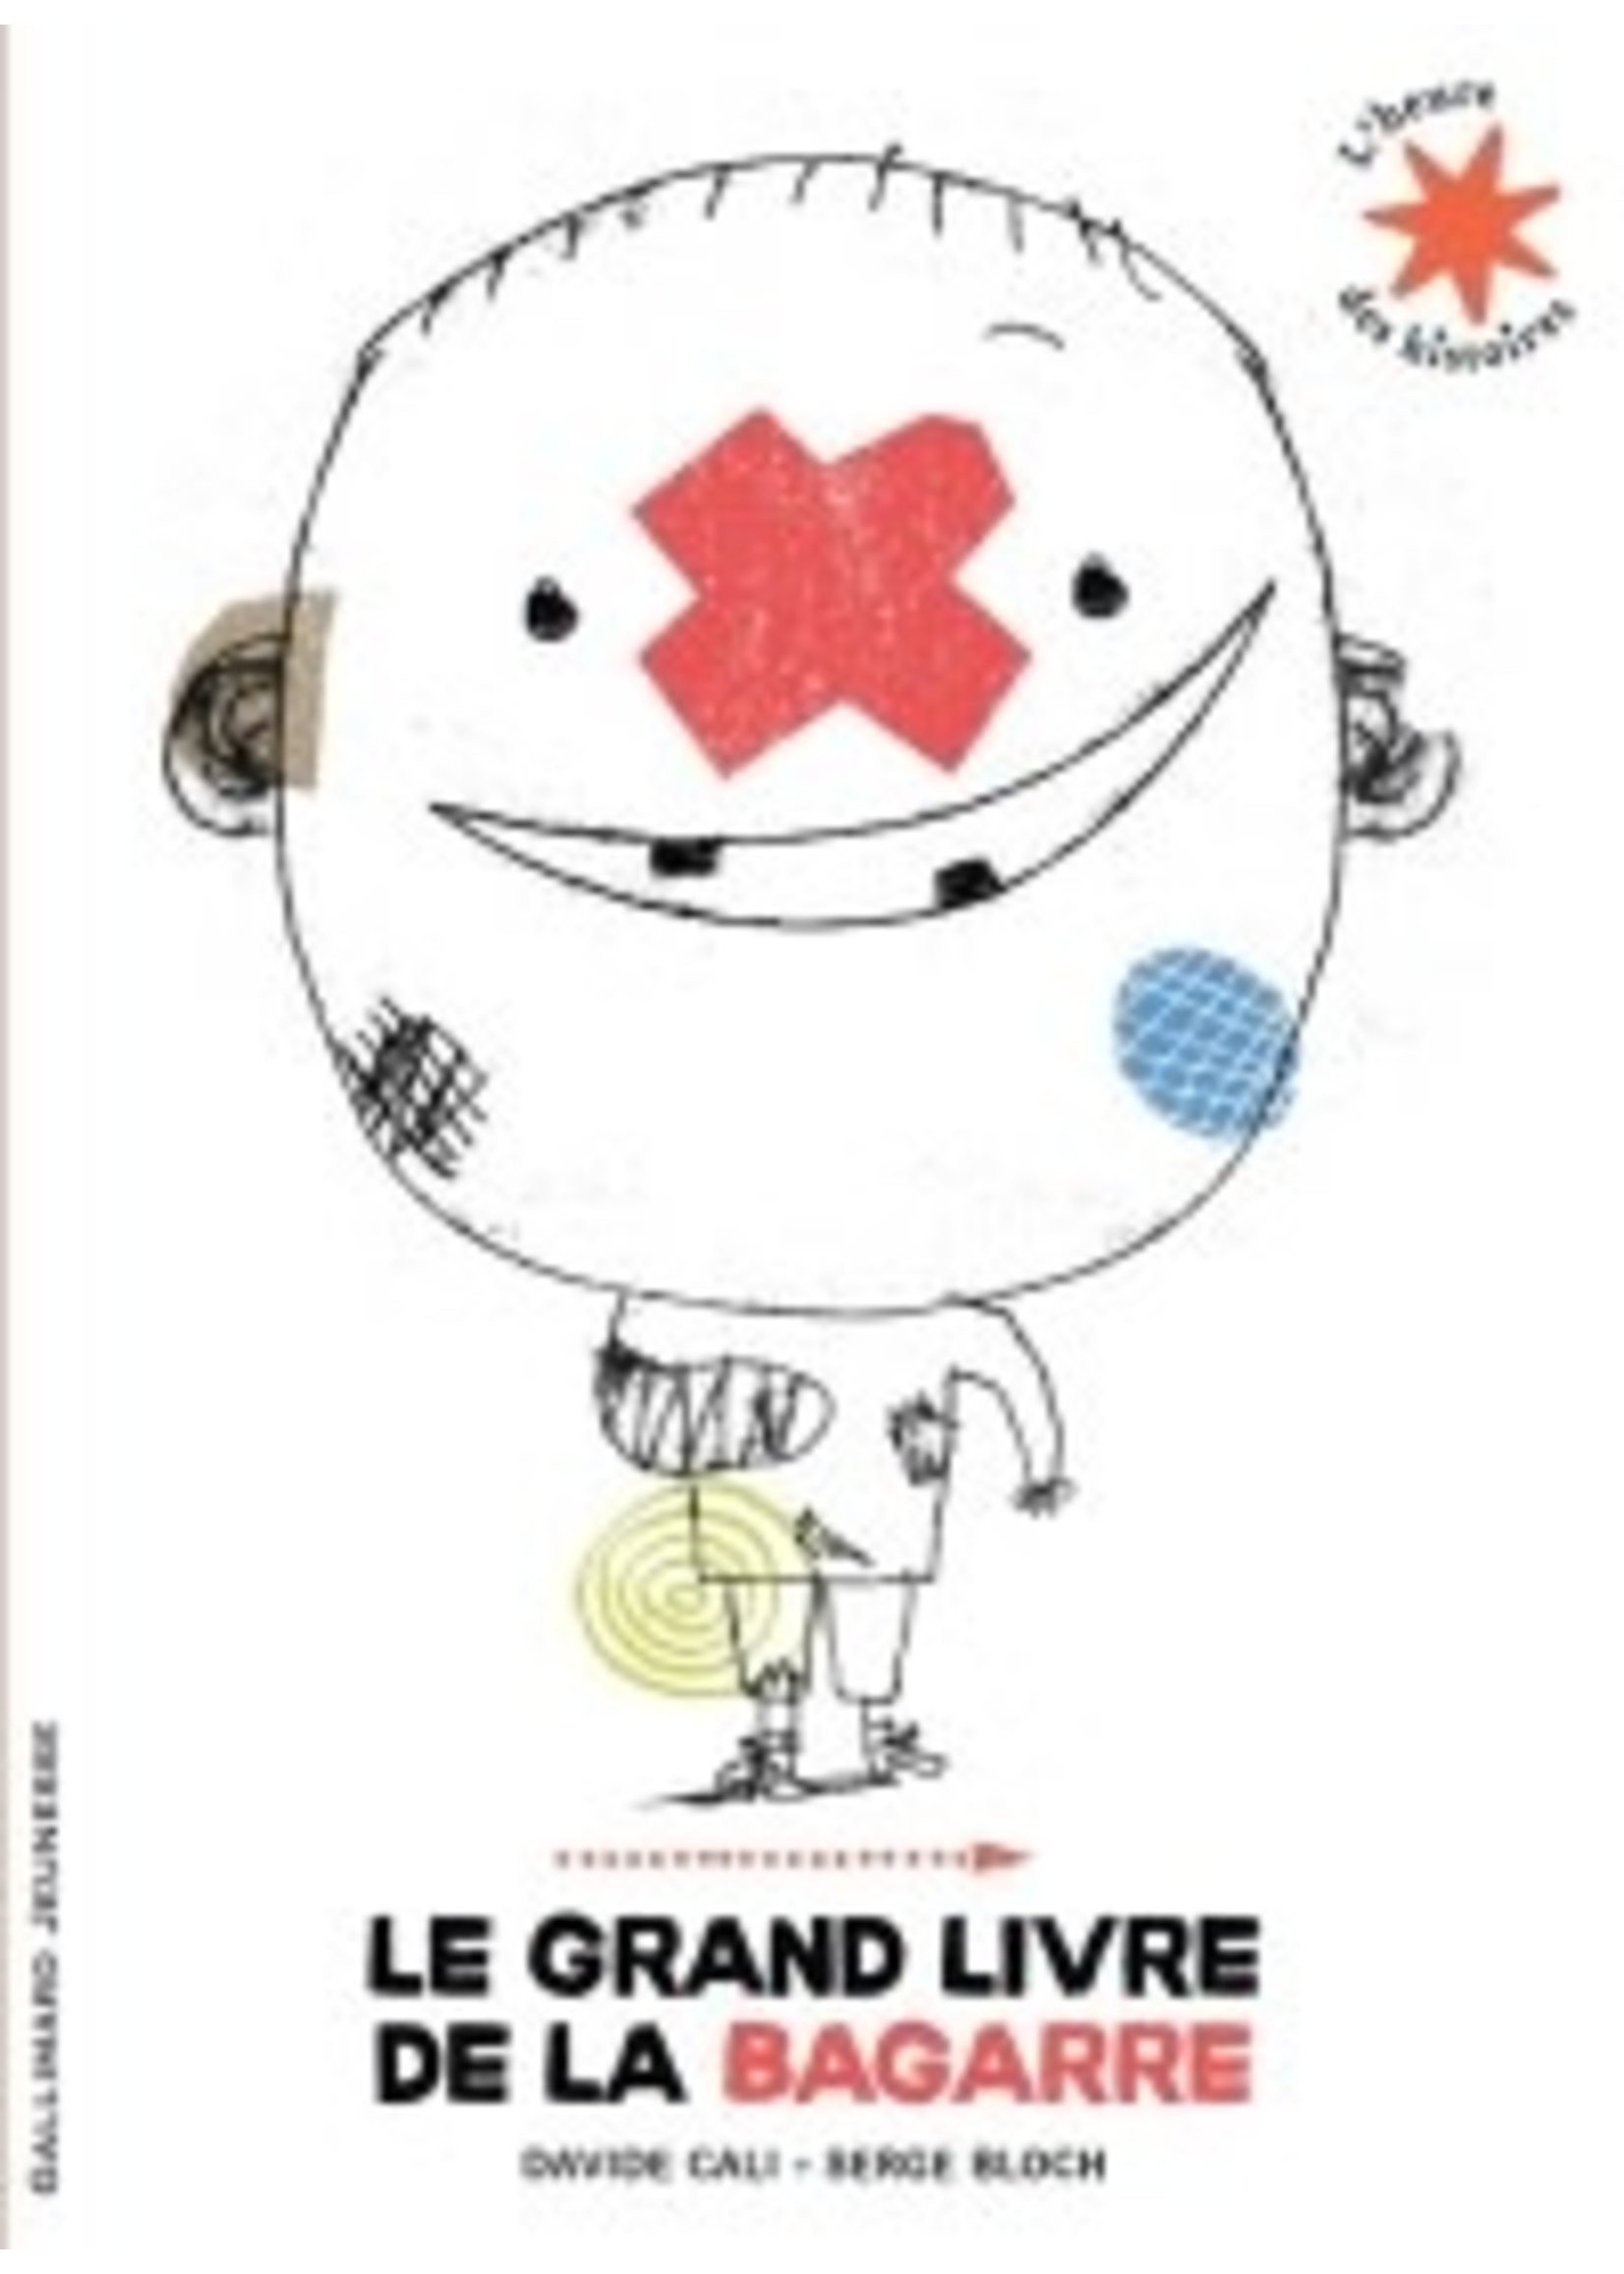 Le grand livre de la bagarre by David Cali, Serge Bloch